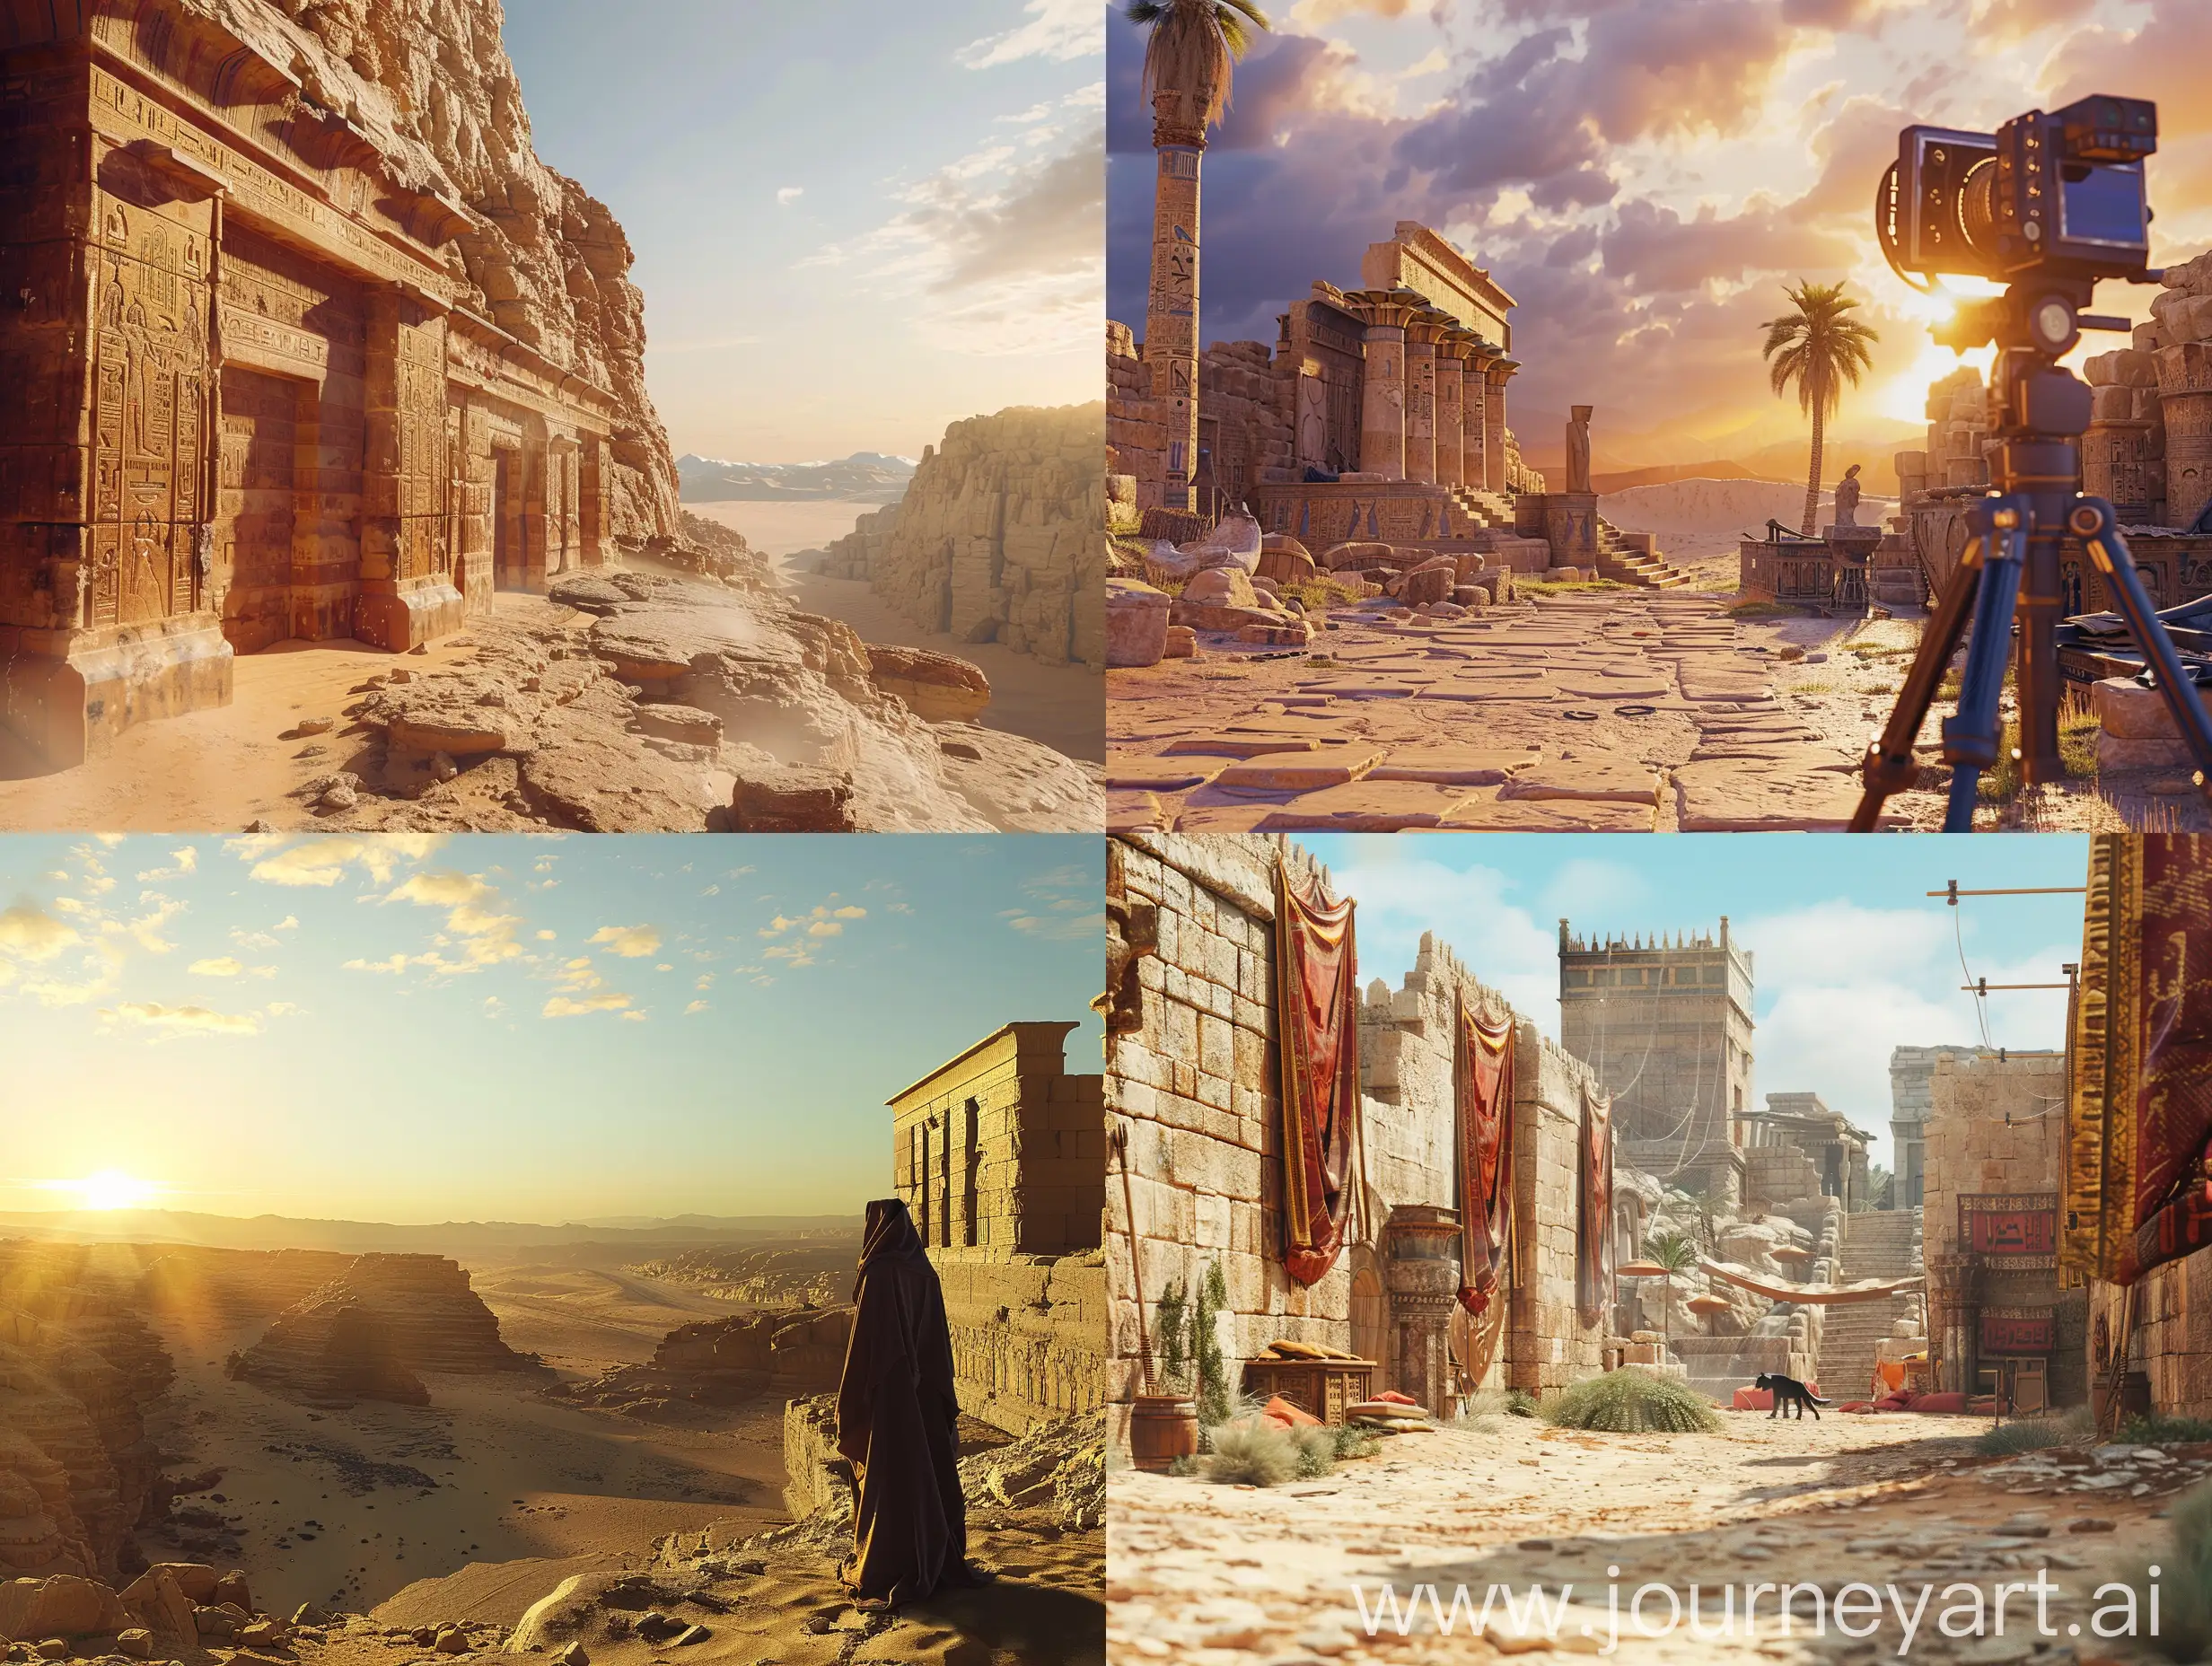 Realistic-4K-Photo-of-Ancient-Civilization-in-Desert-Sunlight